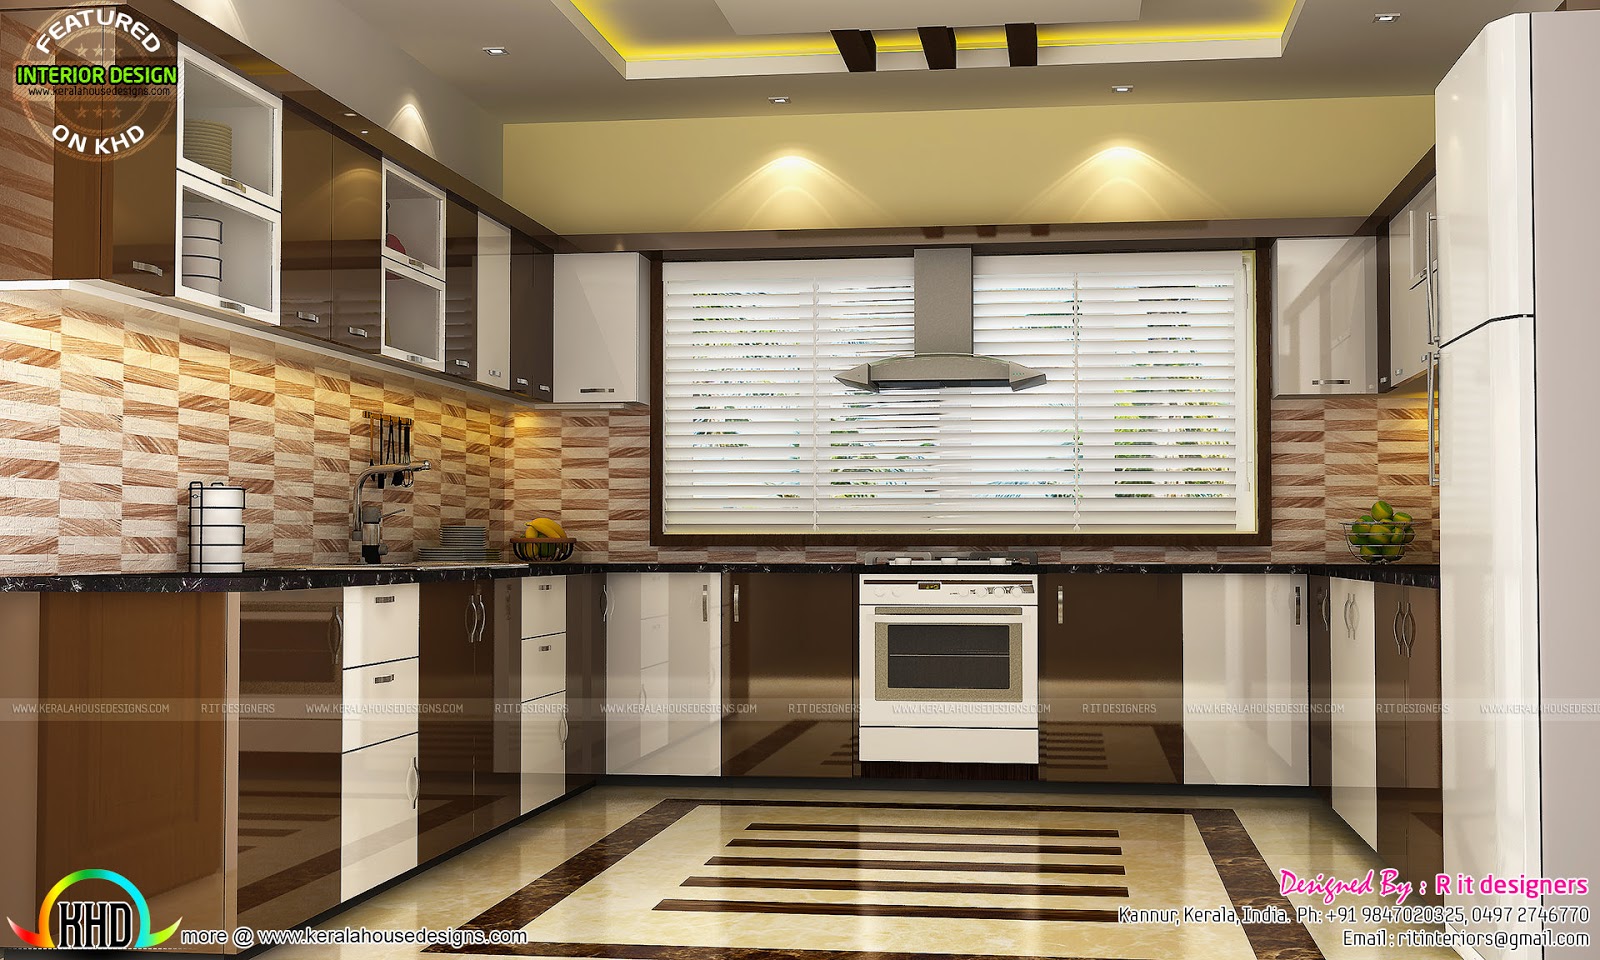 Kitchen, living, bedroom, dining interior decor - Kerala home design